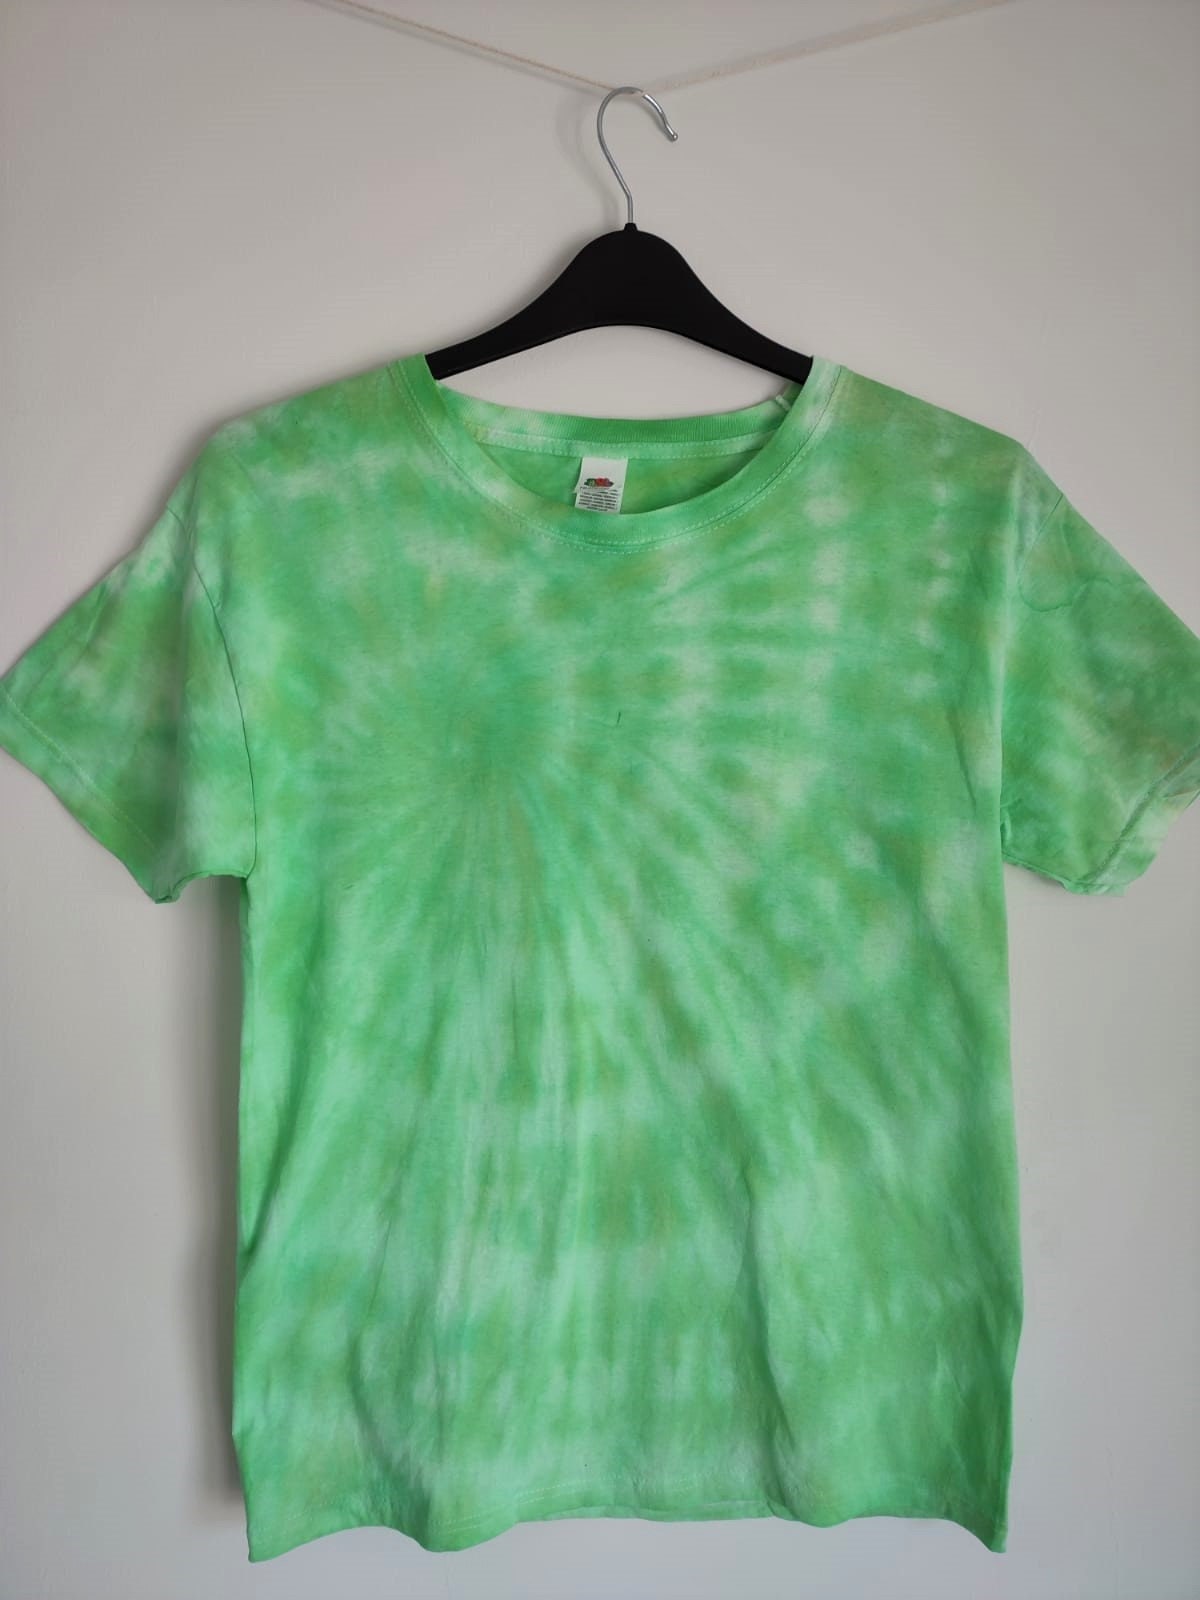 Dylon Fabric Hand Dye, 50g Sachet, Green. Intense Colour Fabric Dye in Easy  Use Sachet. Dylon Tropical Green Fabric Dye 